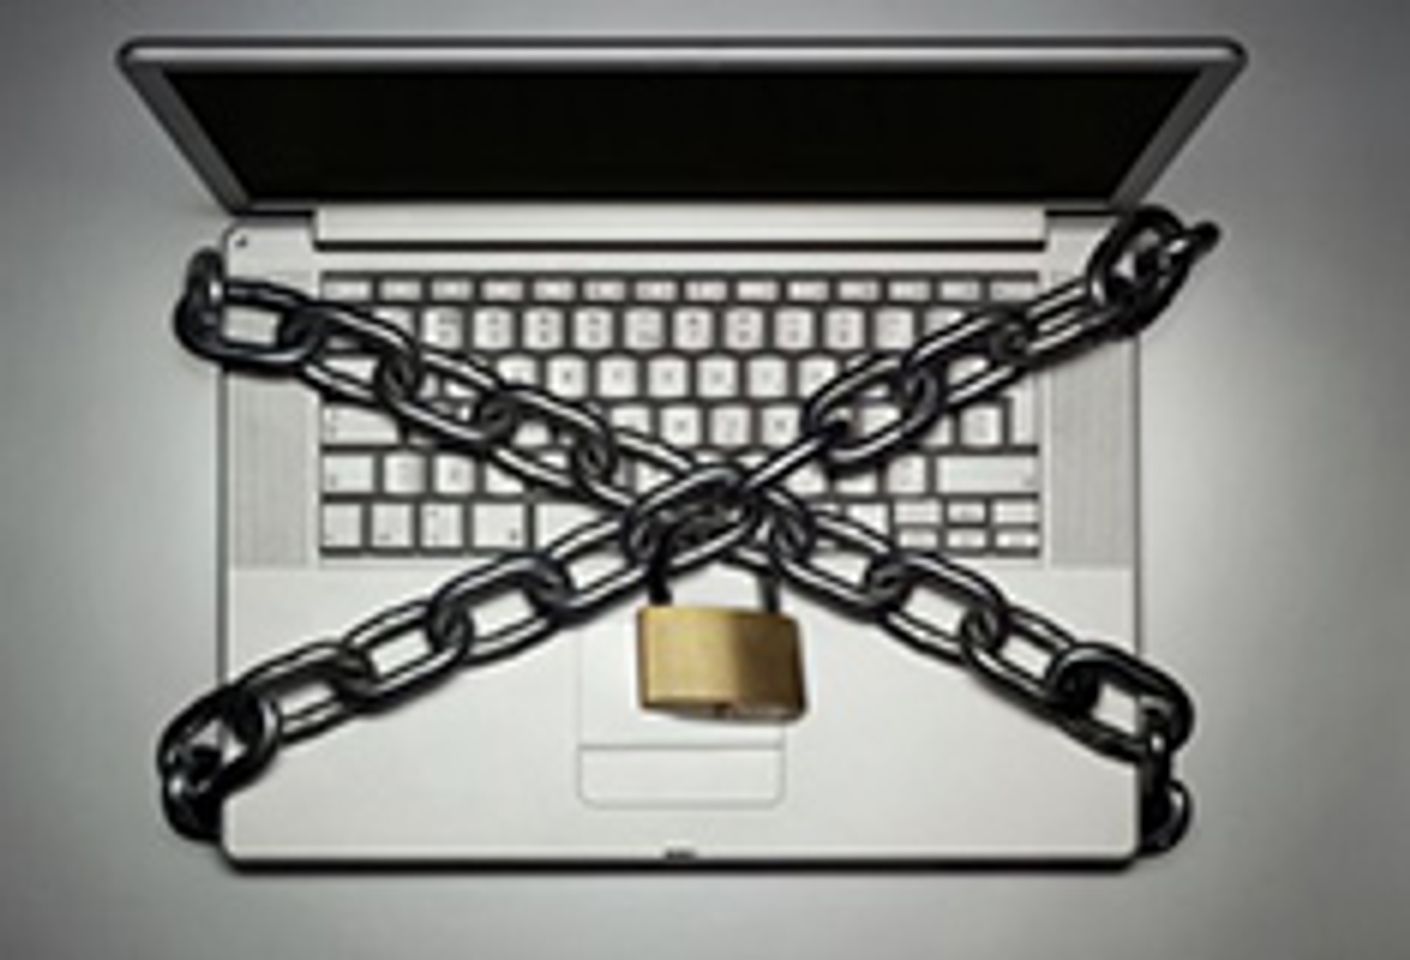 FTC Urges Caution on Net Neutrality Proposals